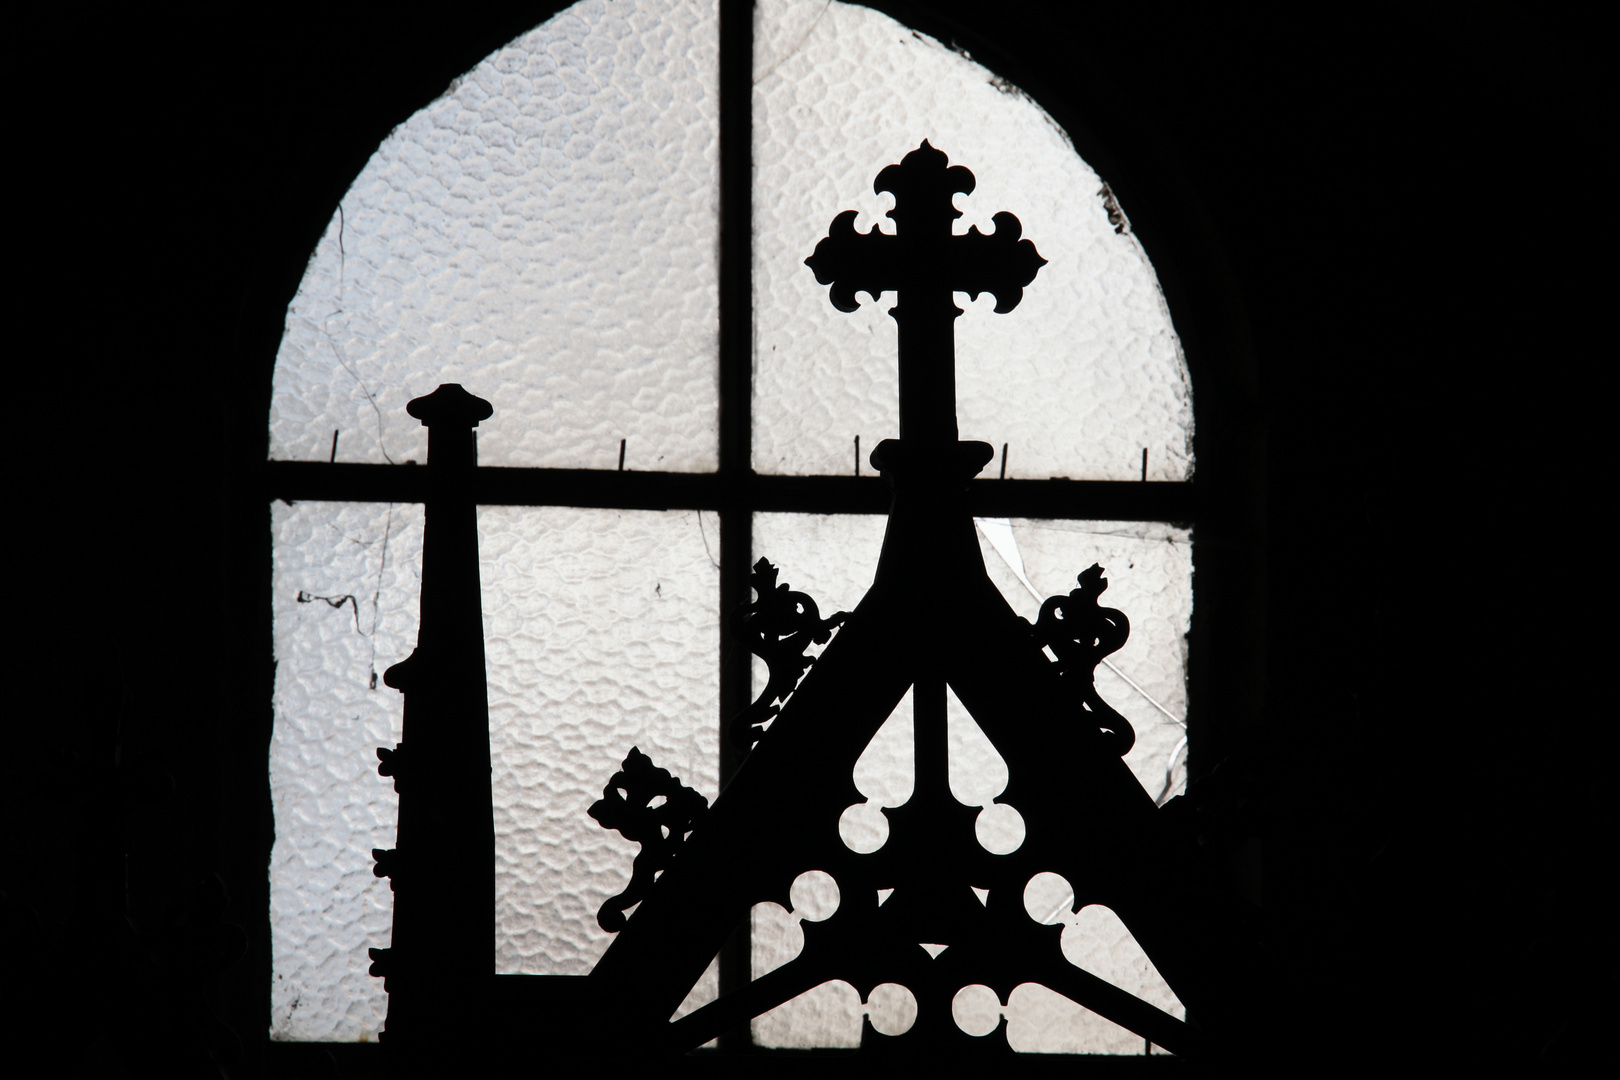 Kirchenkreuzsilhouette